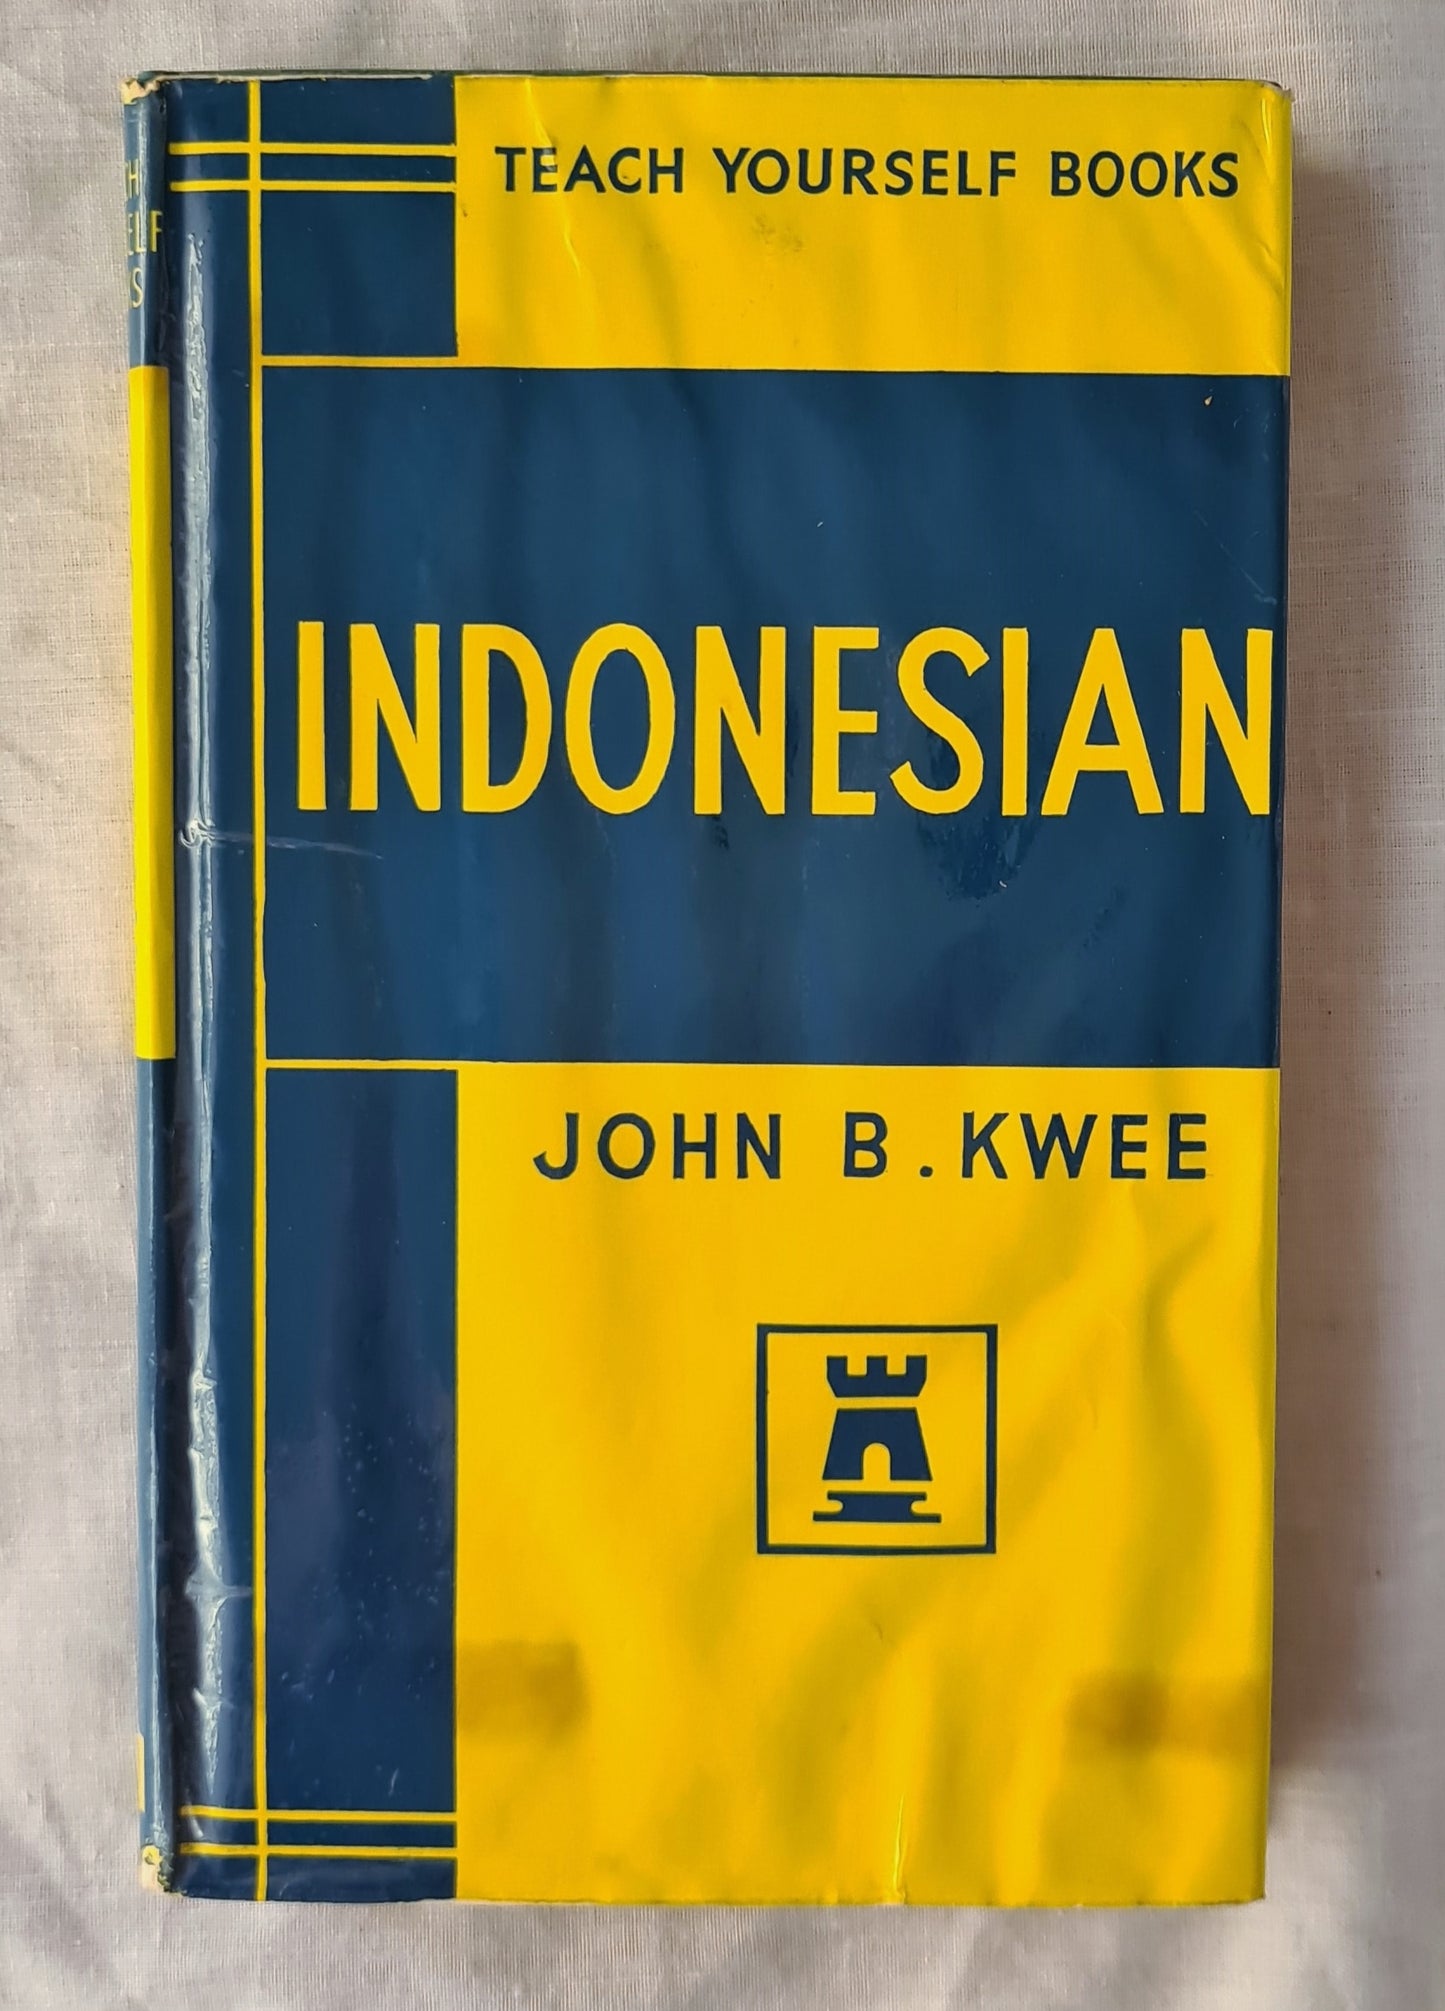 Teach Yourself Indonesian  by John B. Kwee